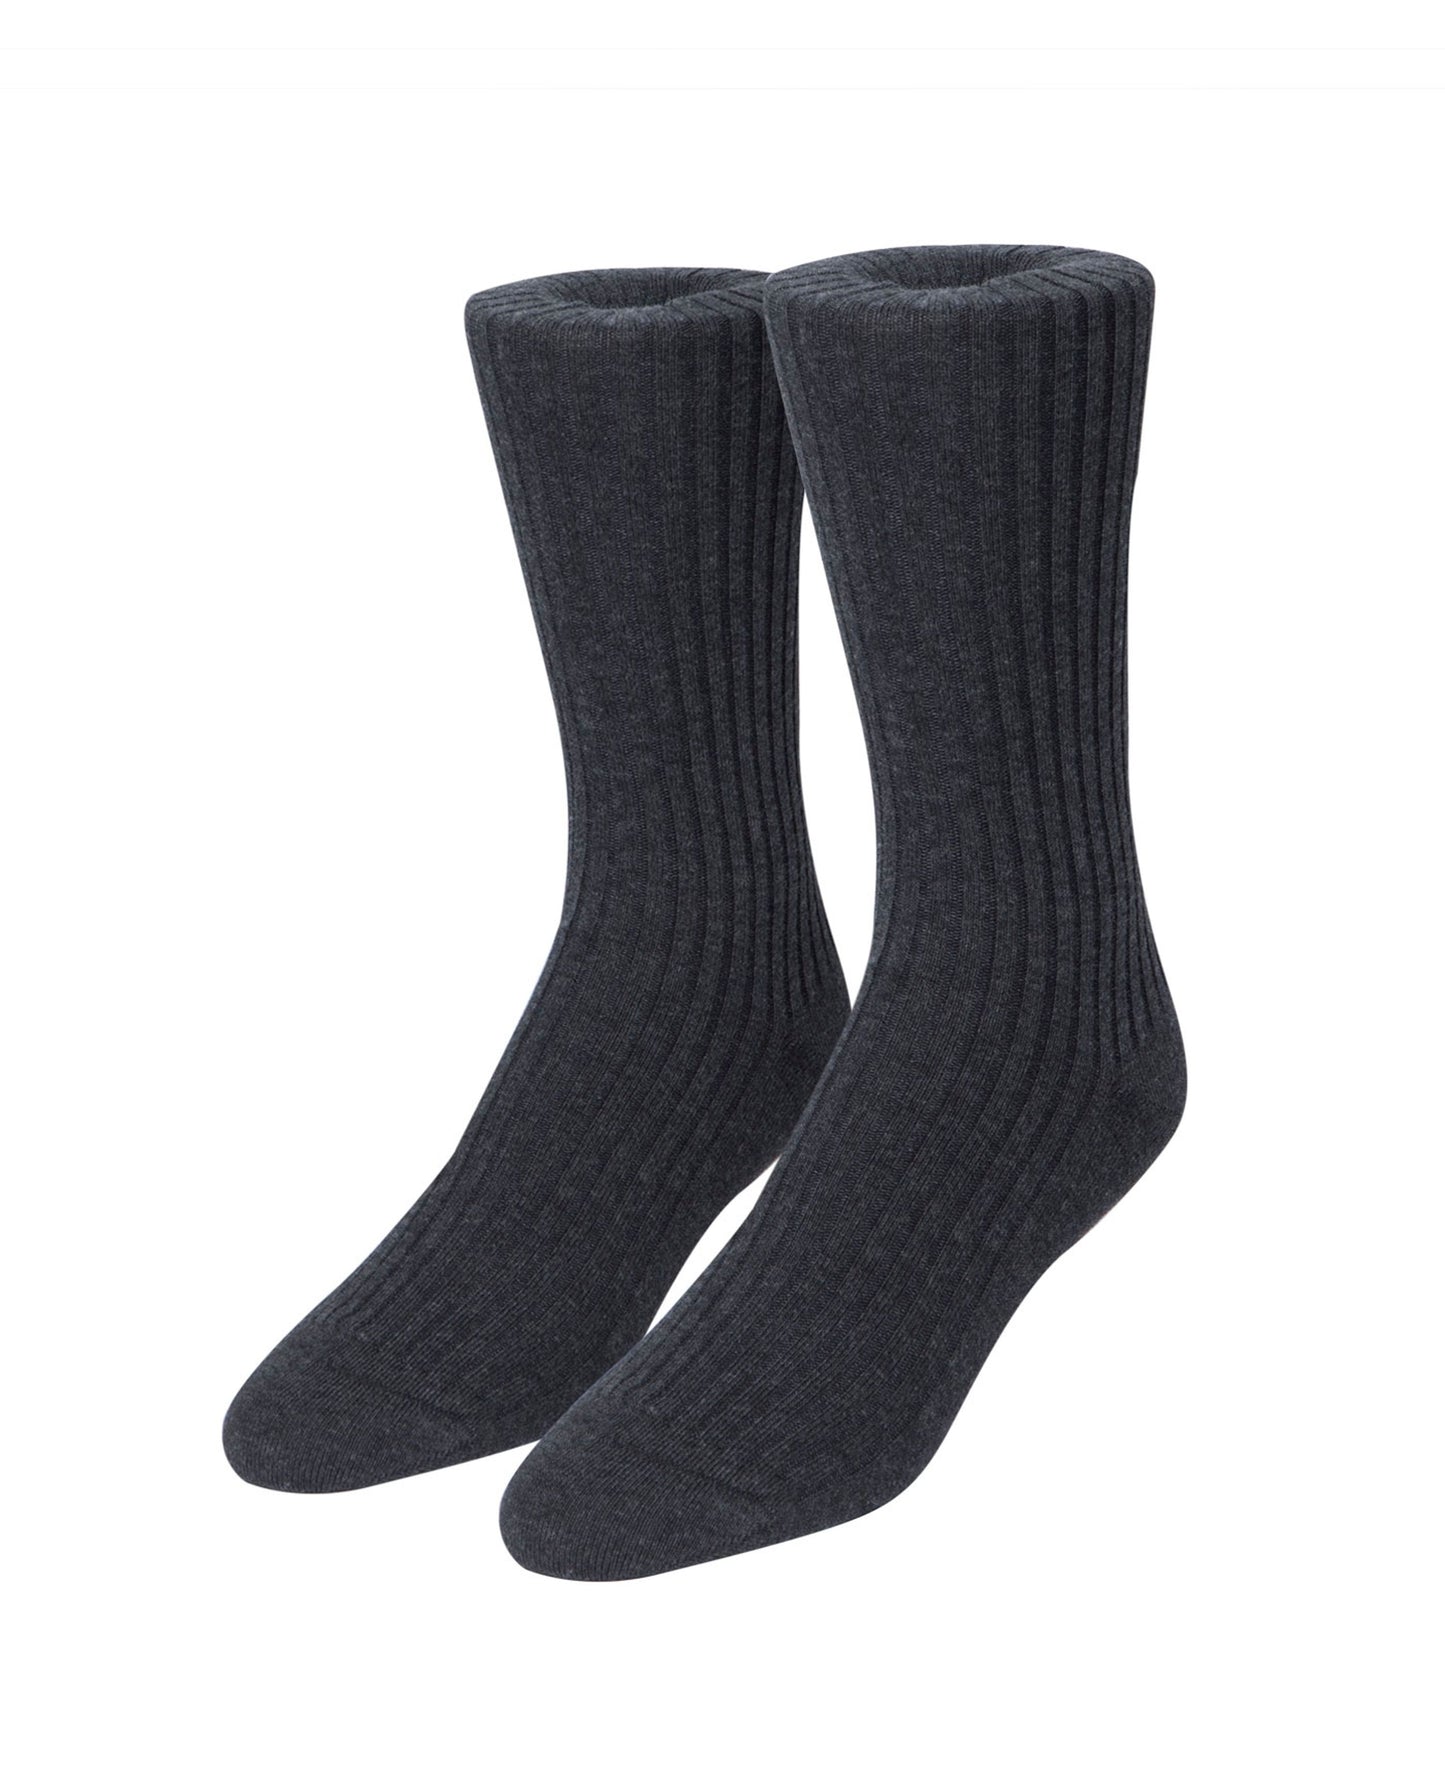 Image 1 of Twin Pack Grey Socks